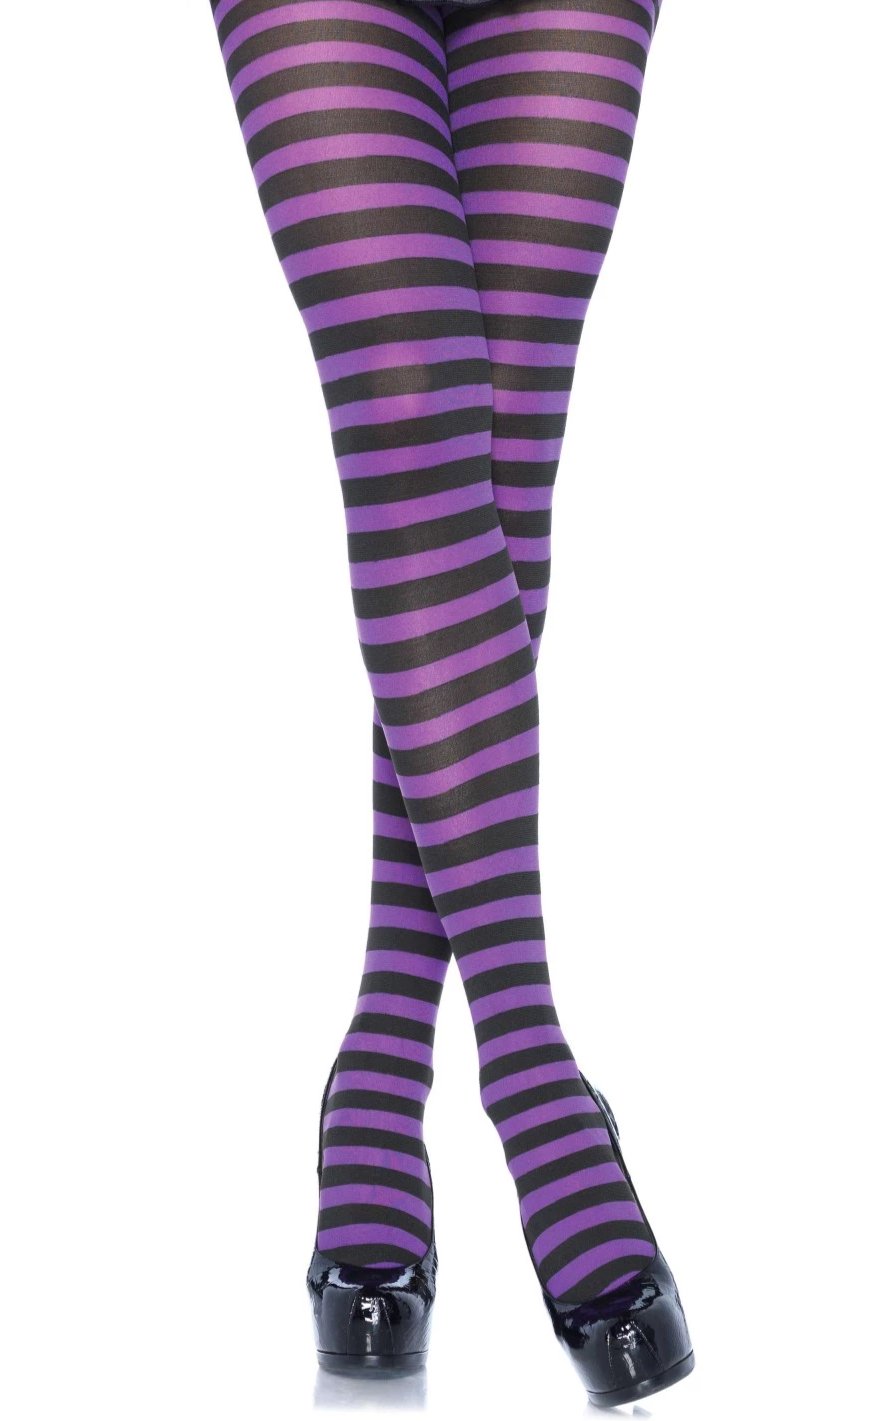 Leg Avenue 7100 Nylon Stripe Tights - purple and black horizontal striped pantyhose